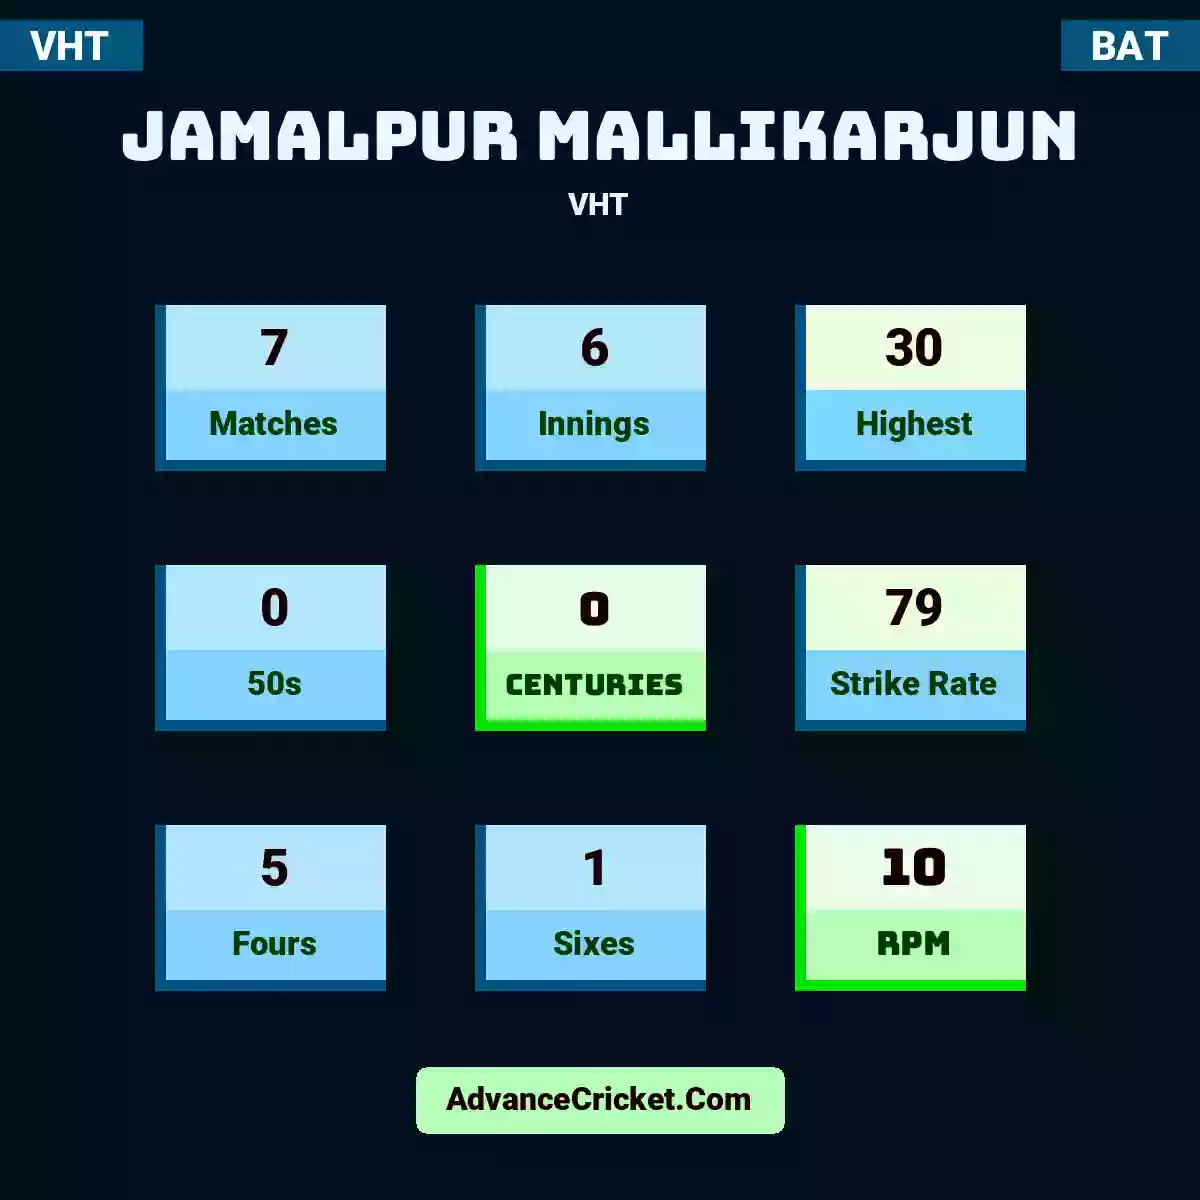 Jamalpur Mallikarjun VHT , Jamalpur Mallikarjun played 7 matches, scored 30 runs as highest, 0 half-centuries, and 0 centuries, with a strike rate of 79. J.Mallikarjun hit 5 fours and 1 sixes, with an RPM of 10.